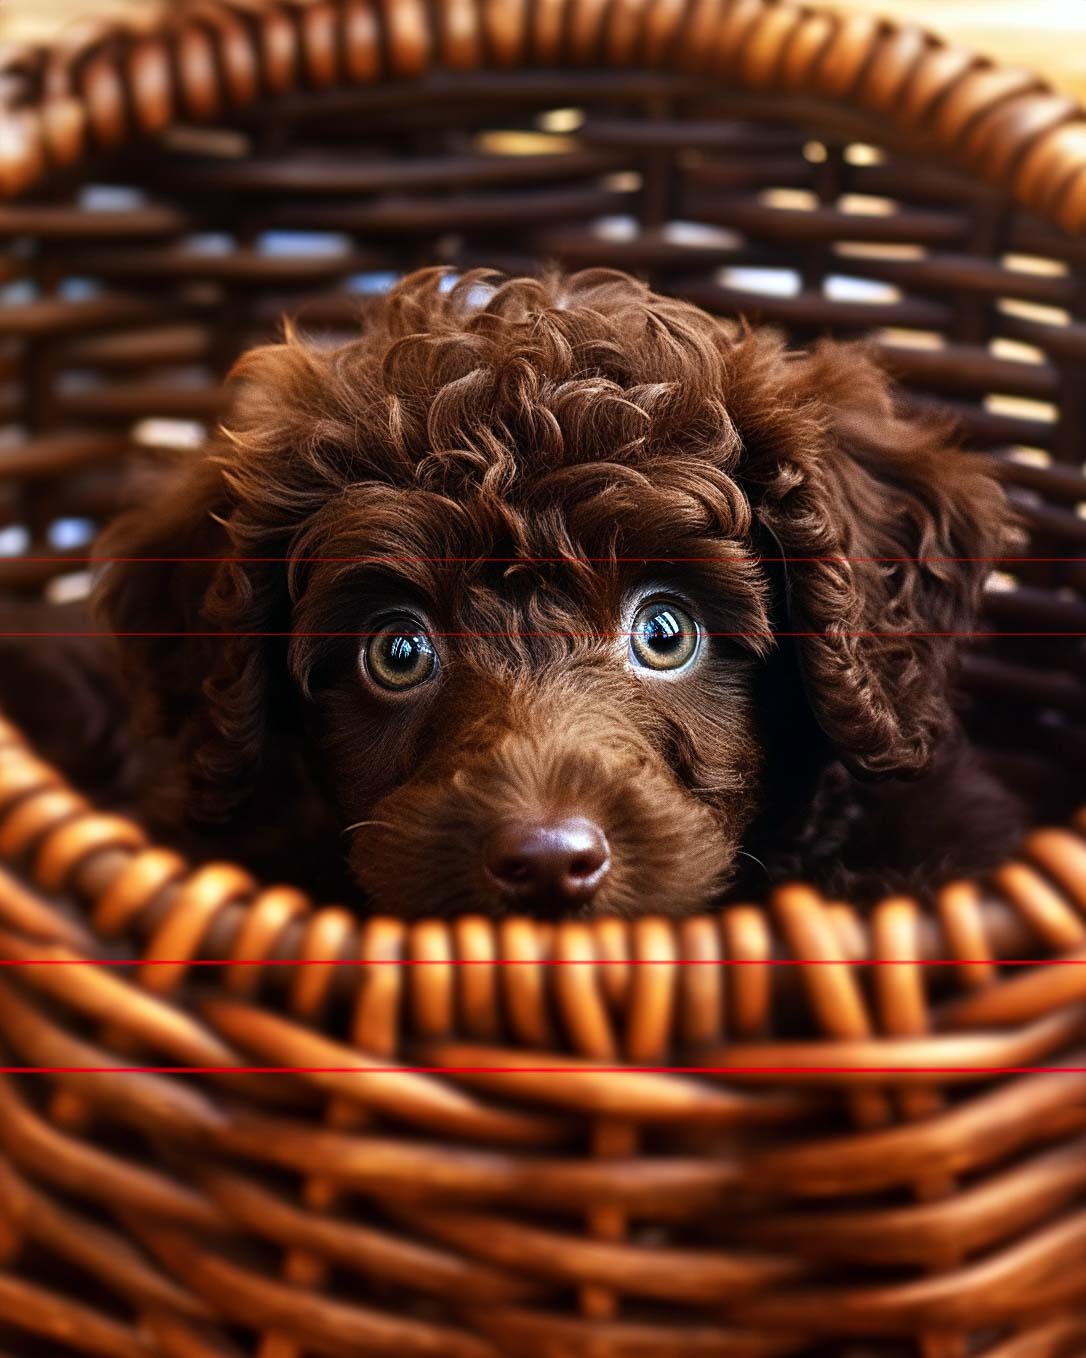 Standard Reddish Brown Poodle Puppy in Basket